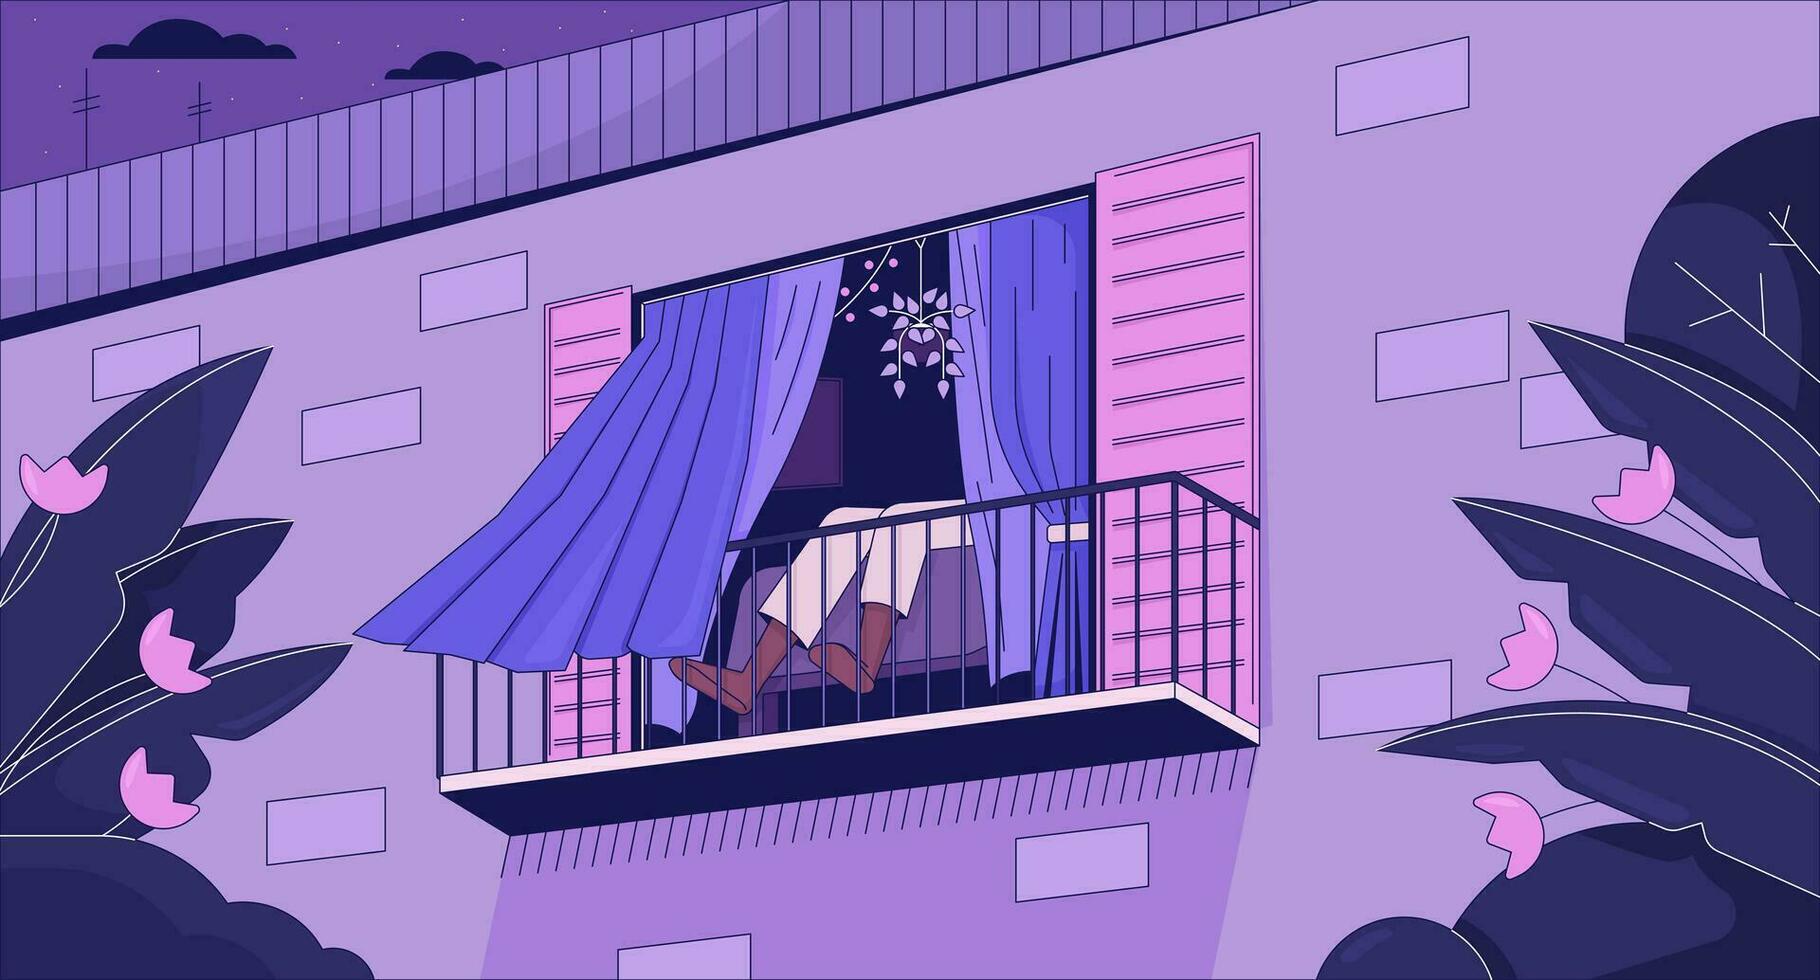 Relax on balcony lo fi aesthetic wallpaper. Opened window. Curtains blowing in wind 2D vector cartoon interior illustration, purple lofi background. 90s retro album art, chill vibes